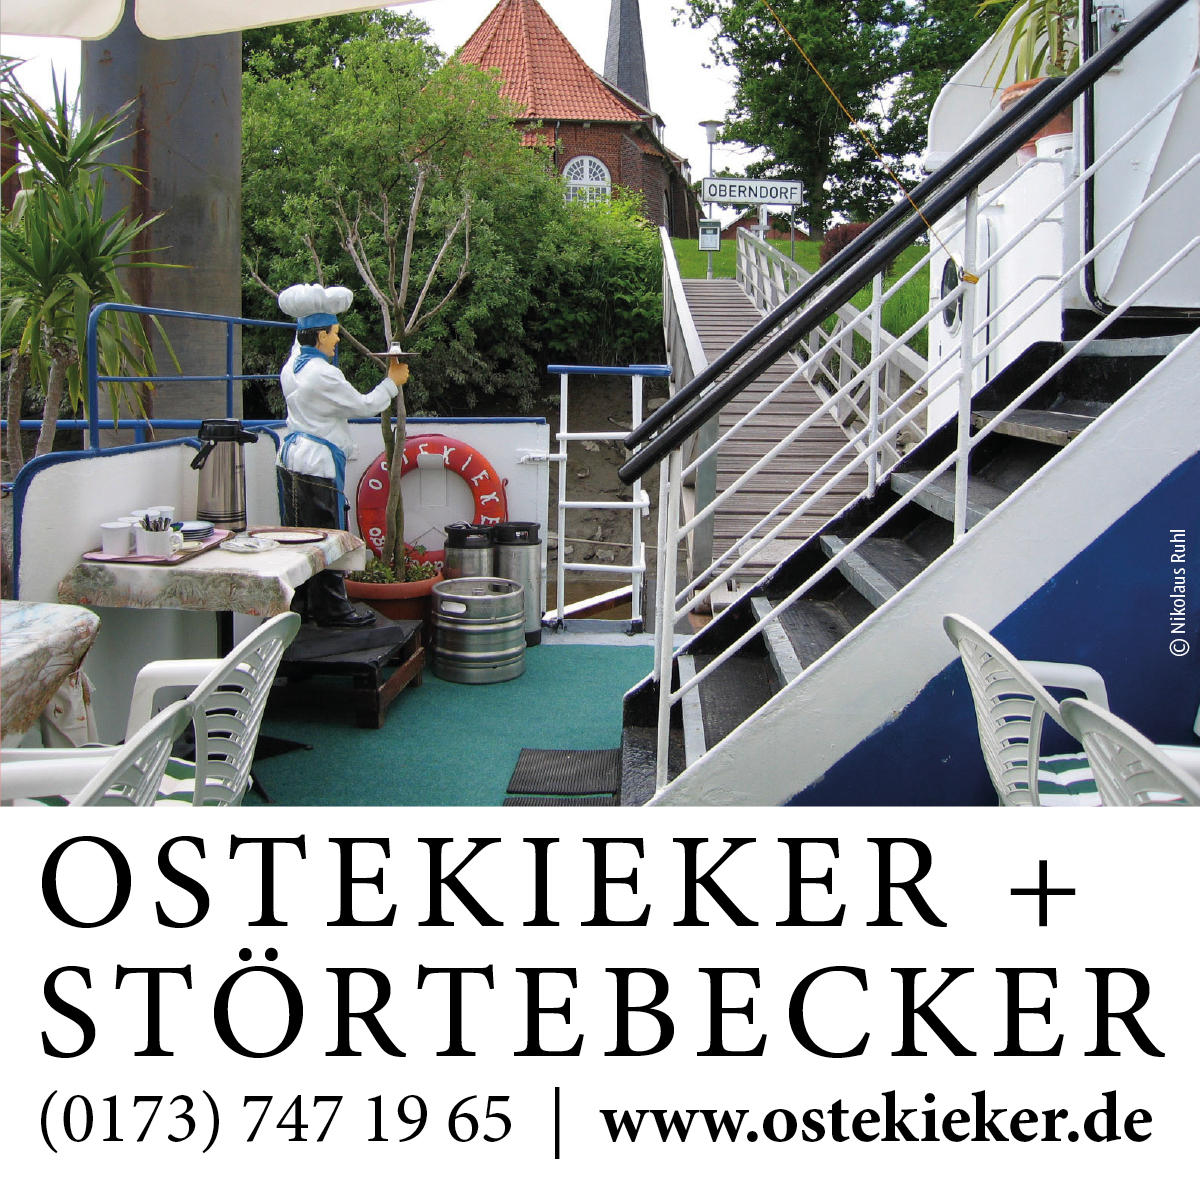 Ostekieker + Störtebecker — Kult-Gastronomie in Oberndorf